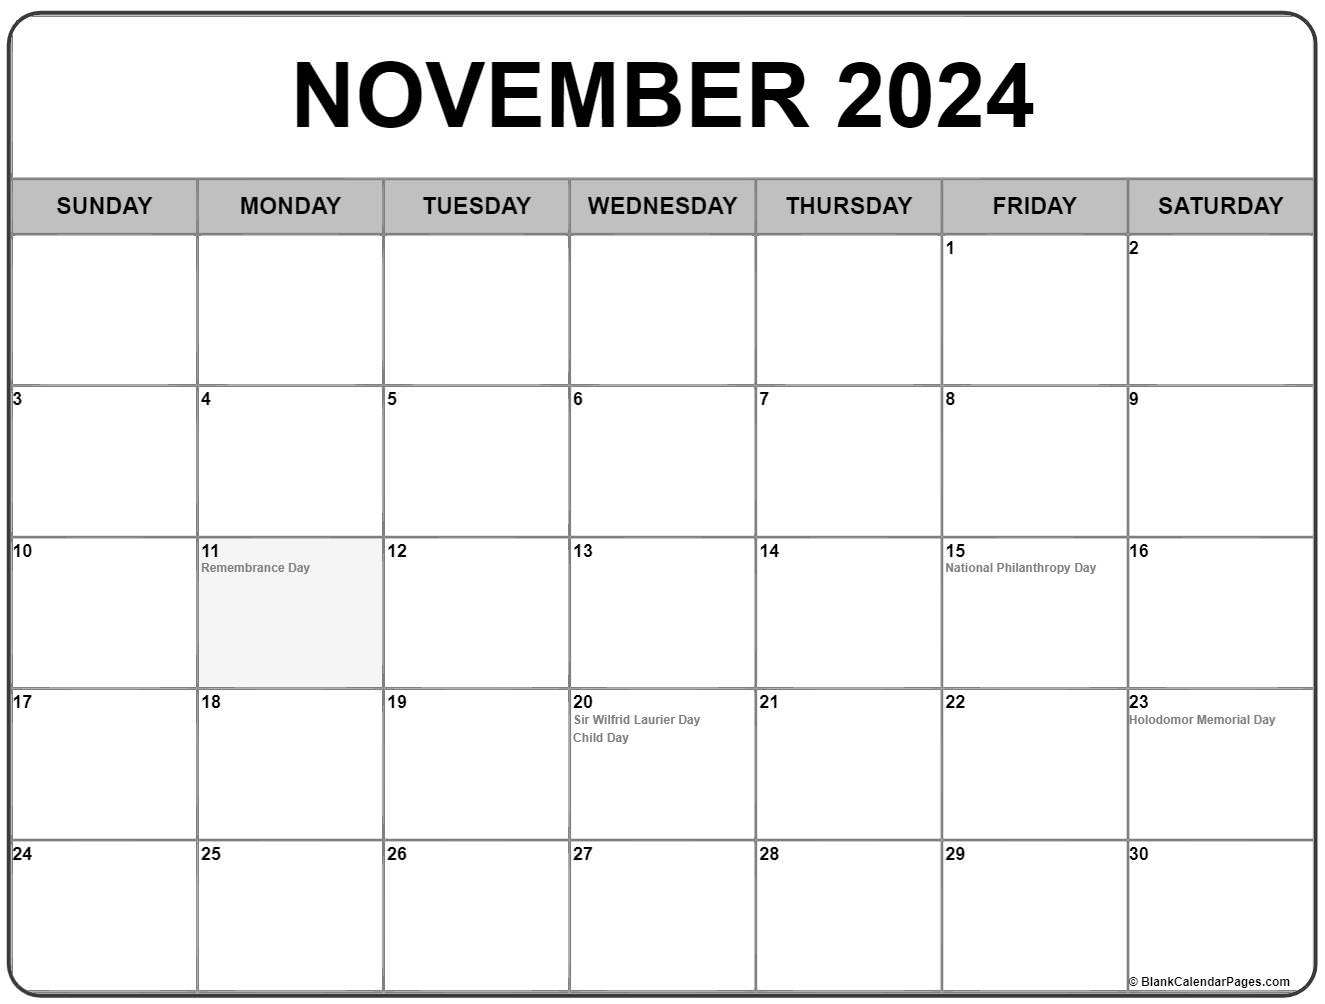 November 2020 calendar with holidays